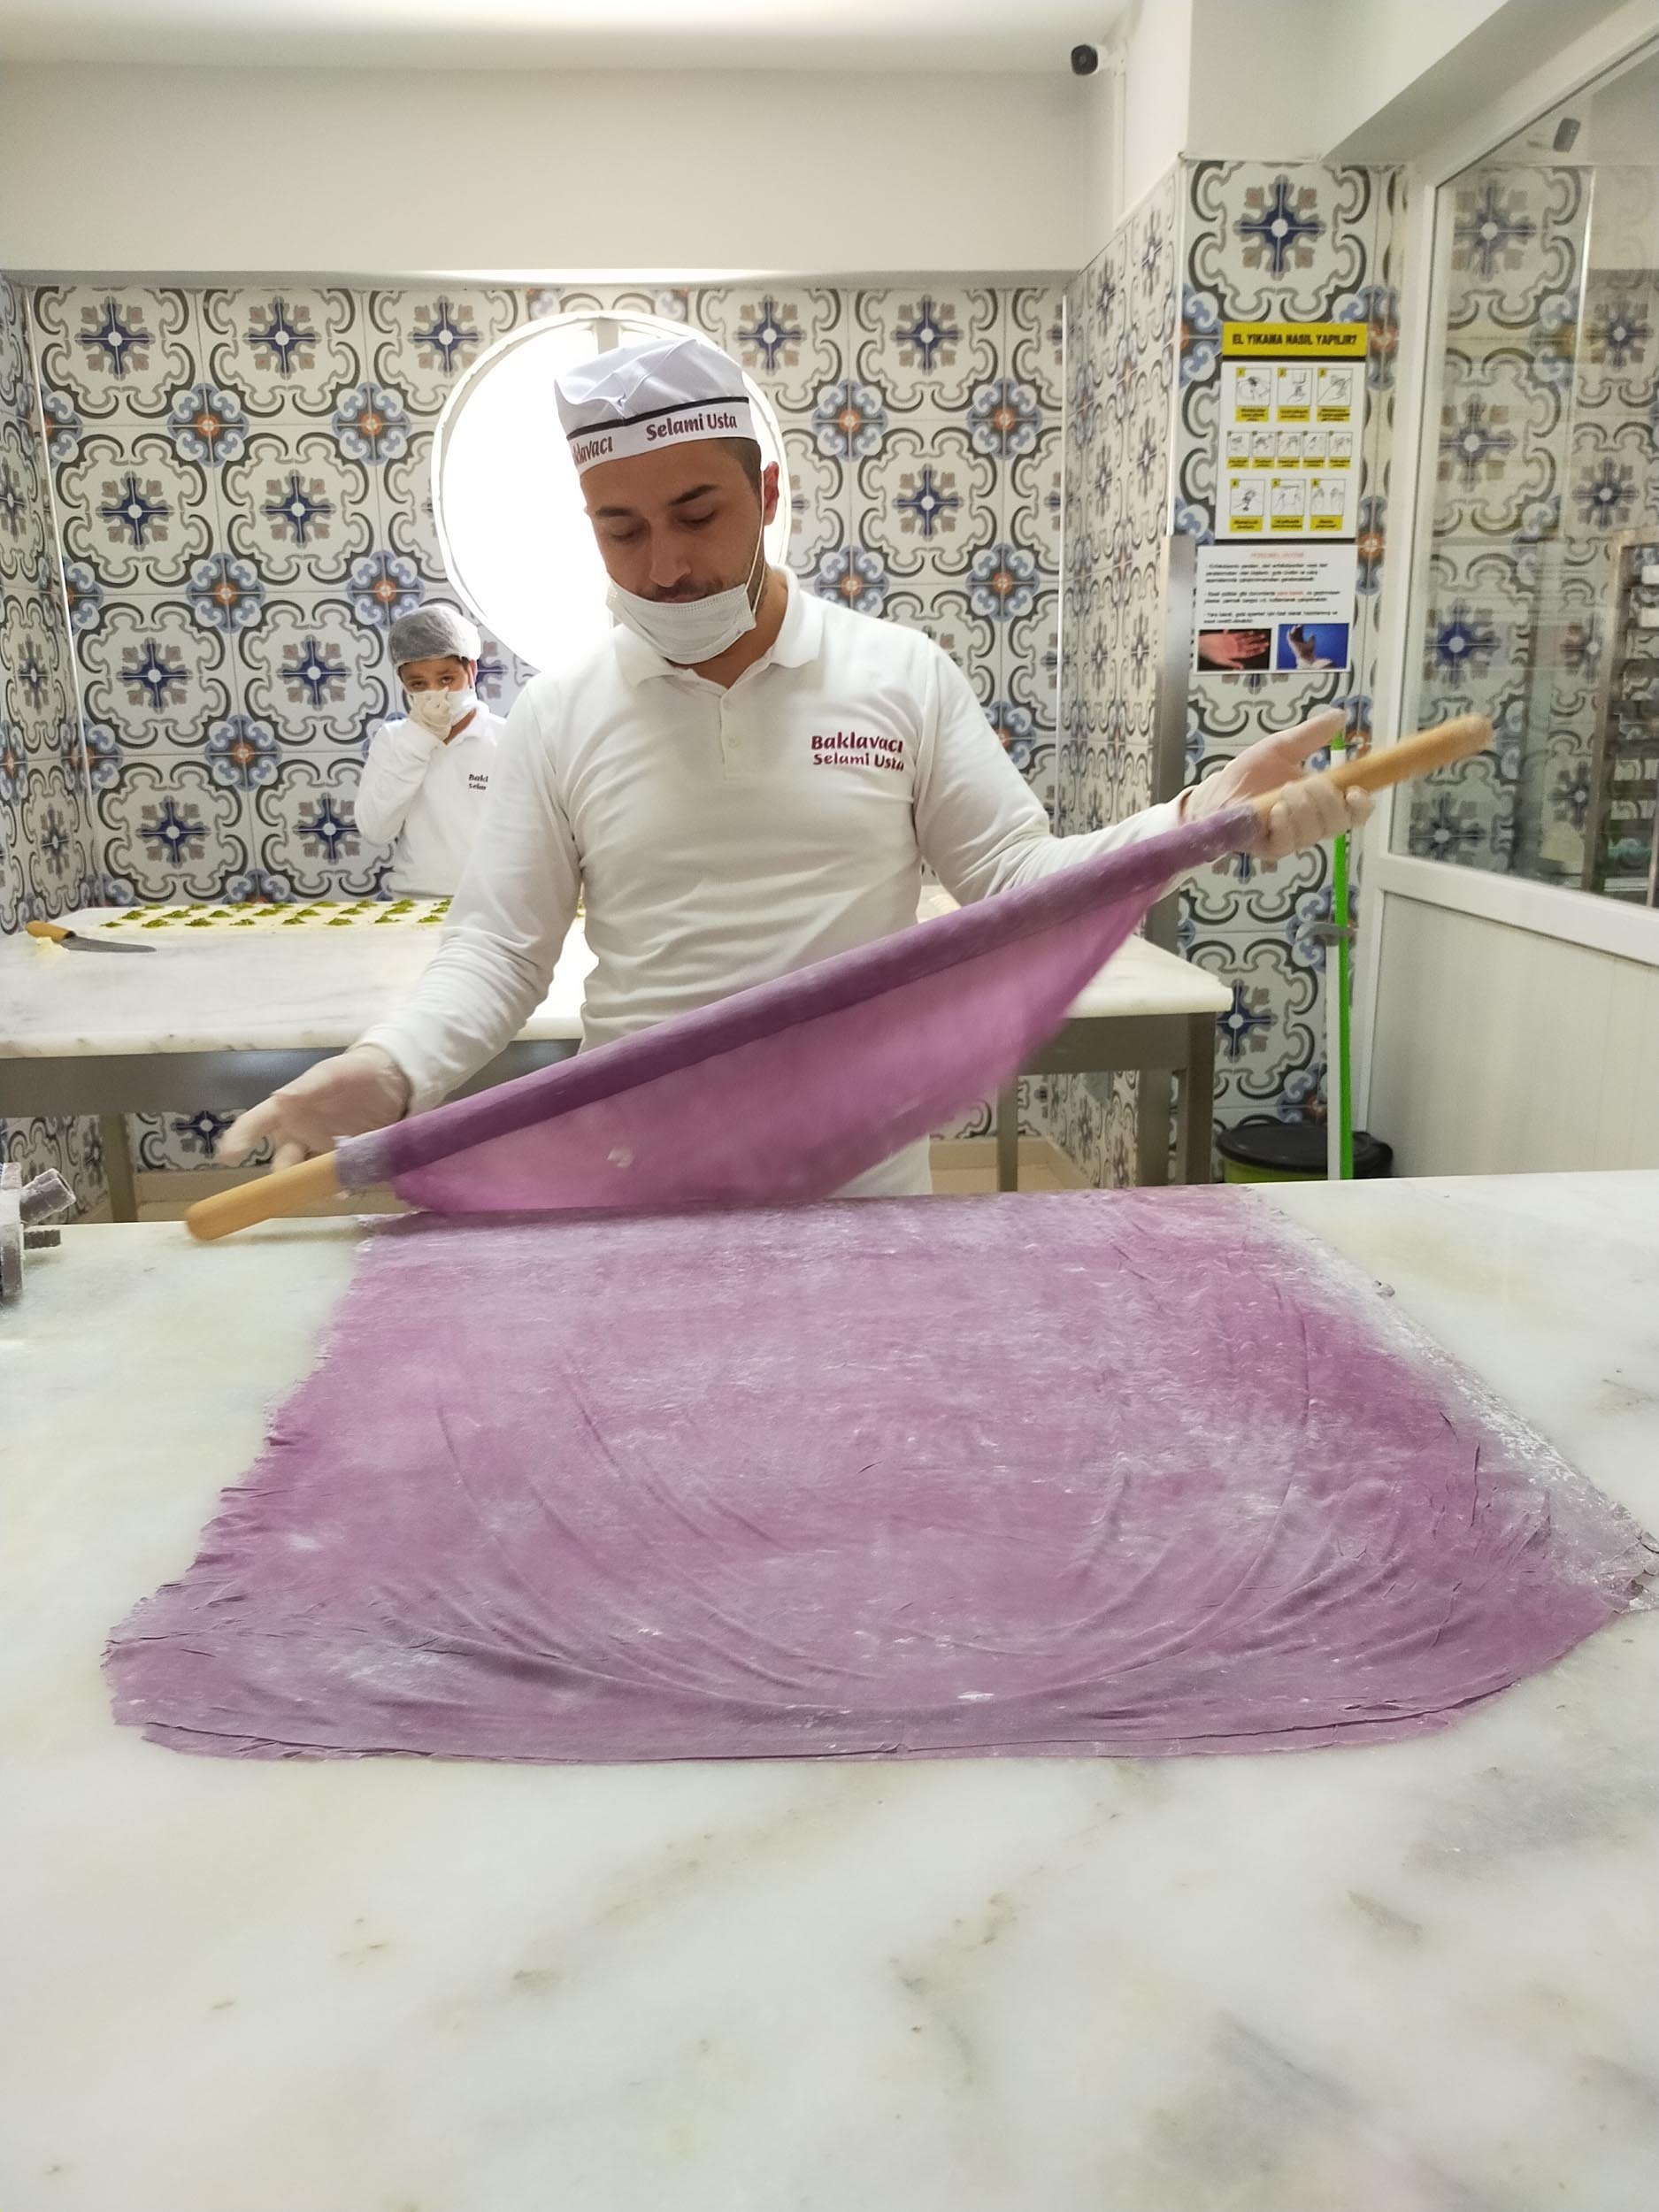 Baker Selami Atiş rolls out purple dough for his diabetes-friendly baklava in Erzurum, Turkey, Aug 3, 2020. (DHA Photo)